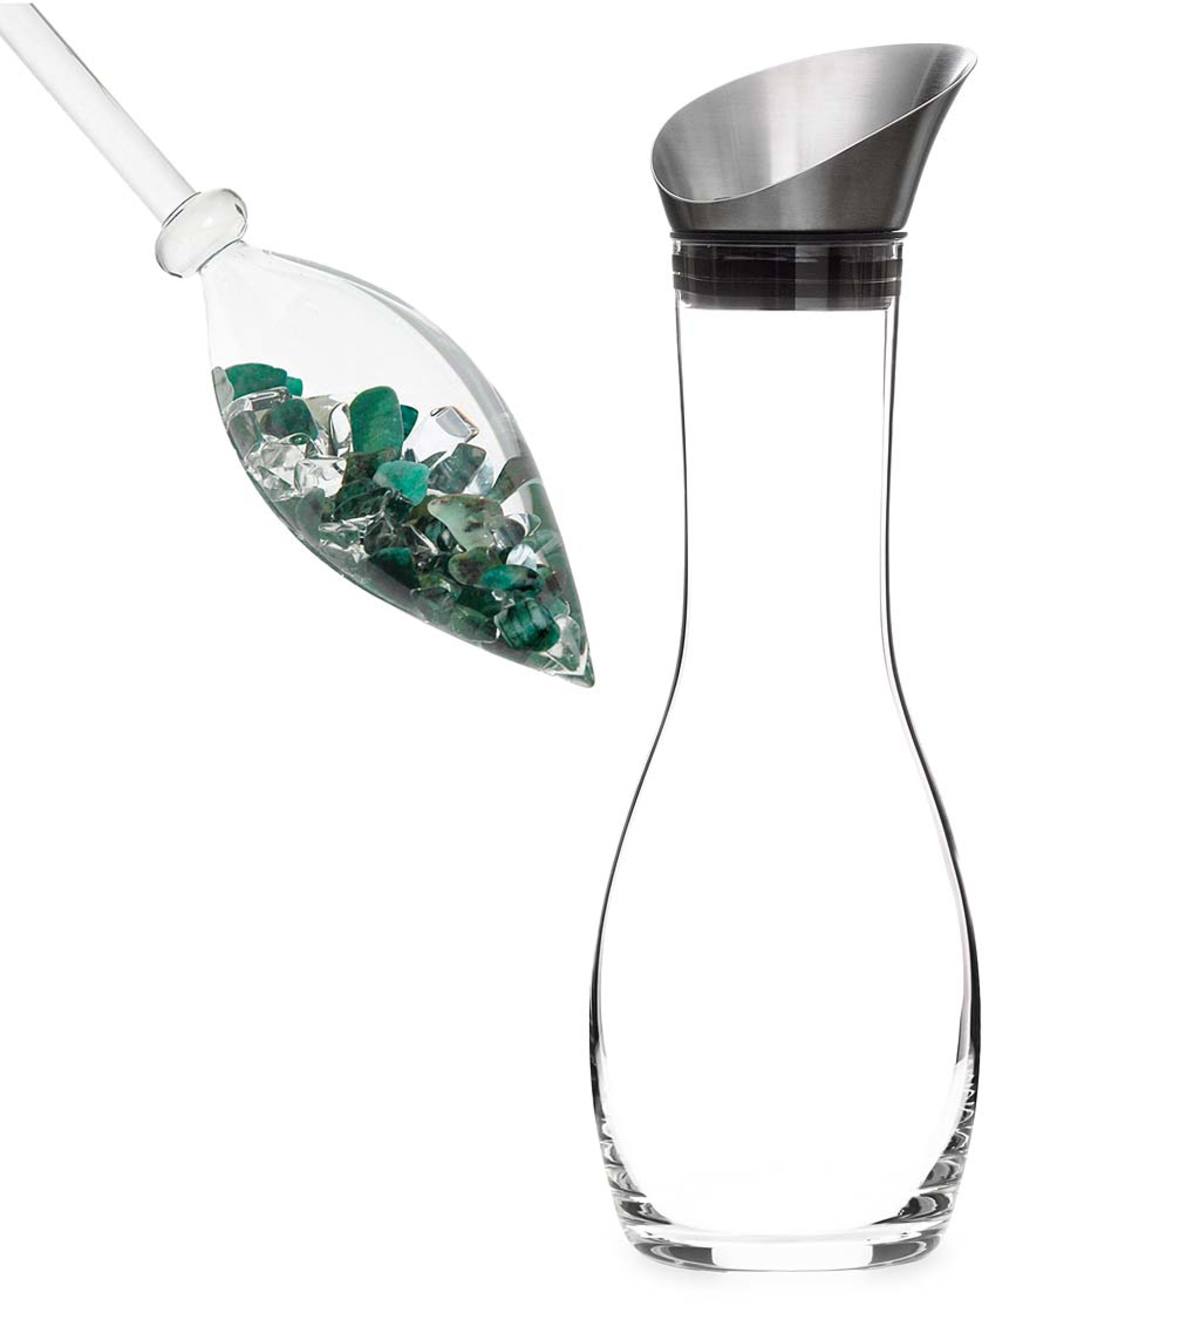 VitaJuwel Gemstone Enhanced "Vitality" Water Vial&Decanter Set